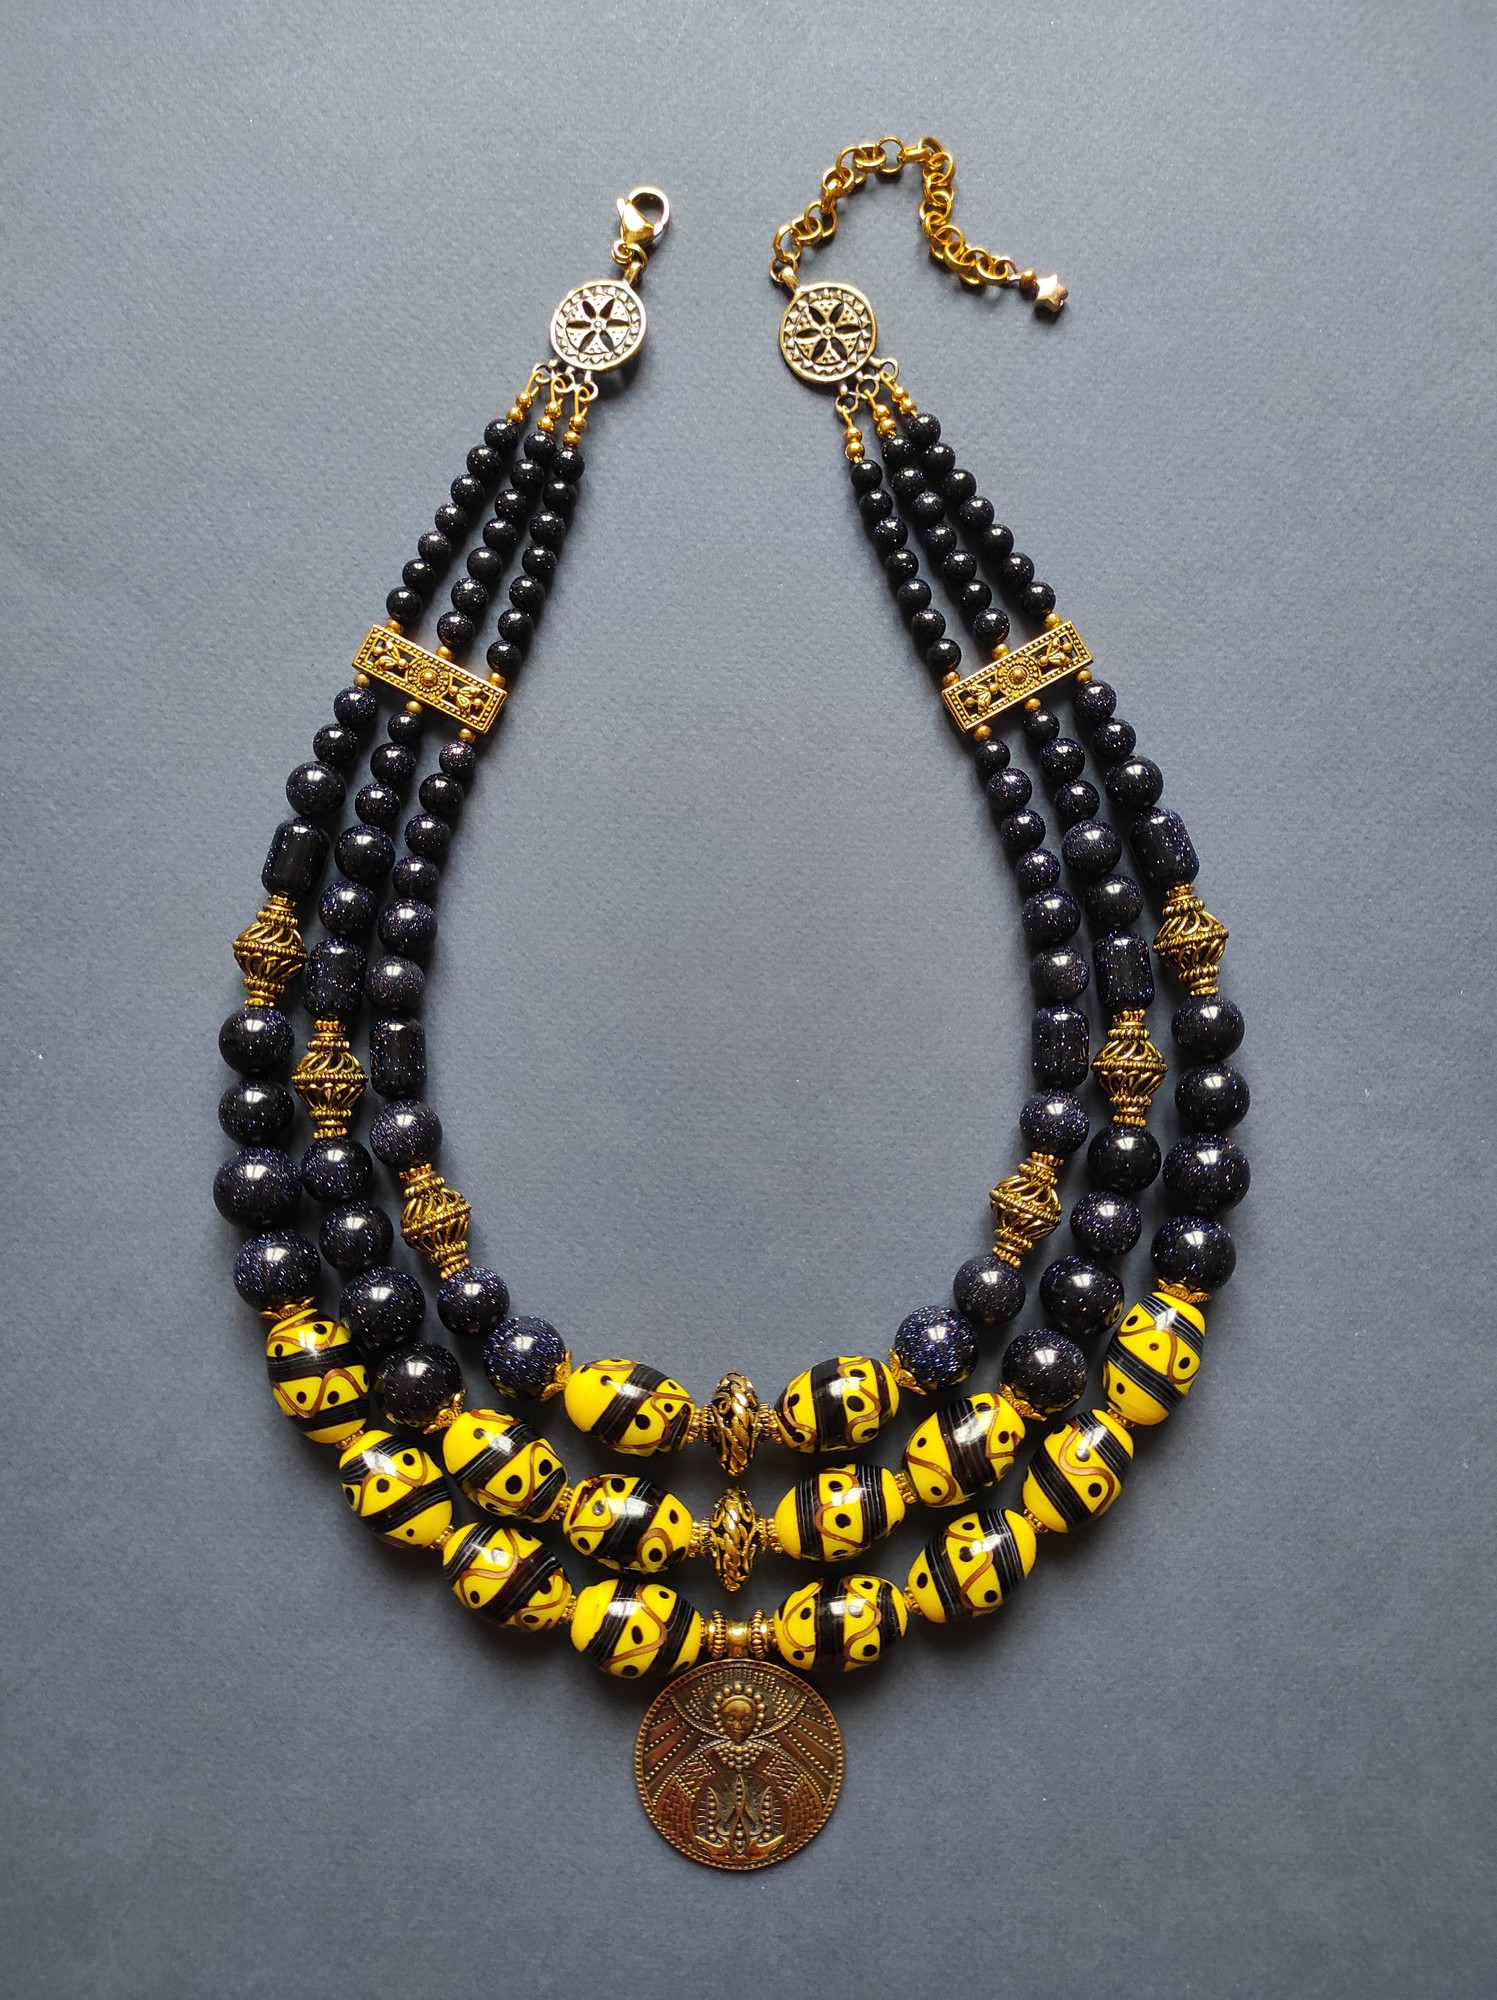 Necklace  "Ukrainian starfall" from glass beads and adventurous